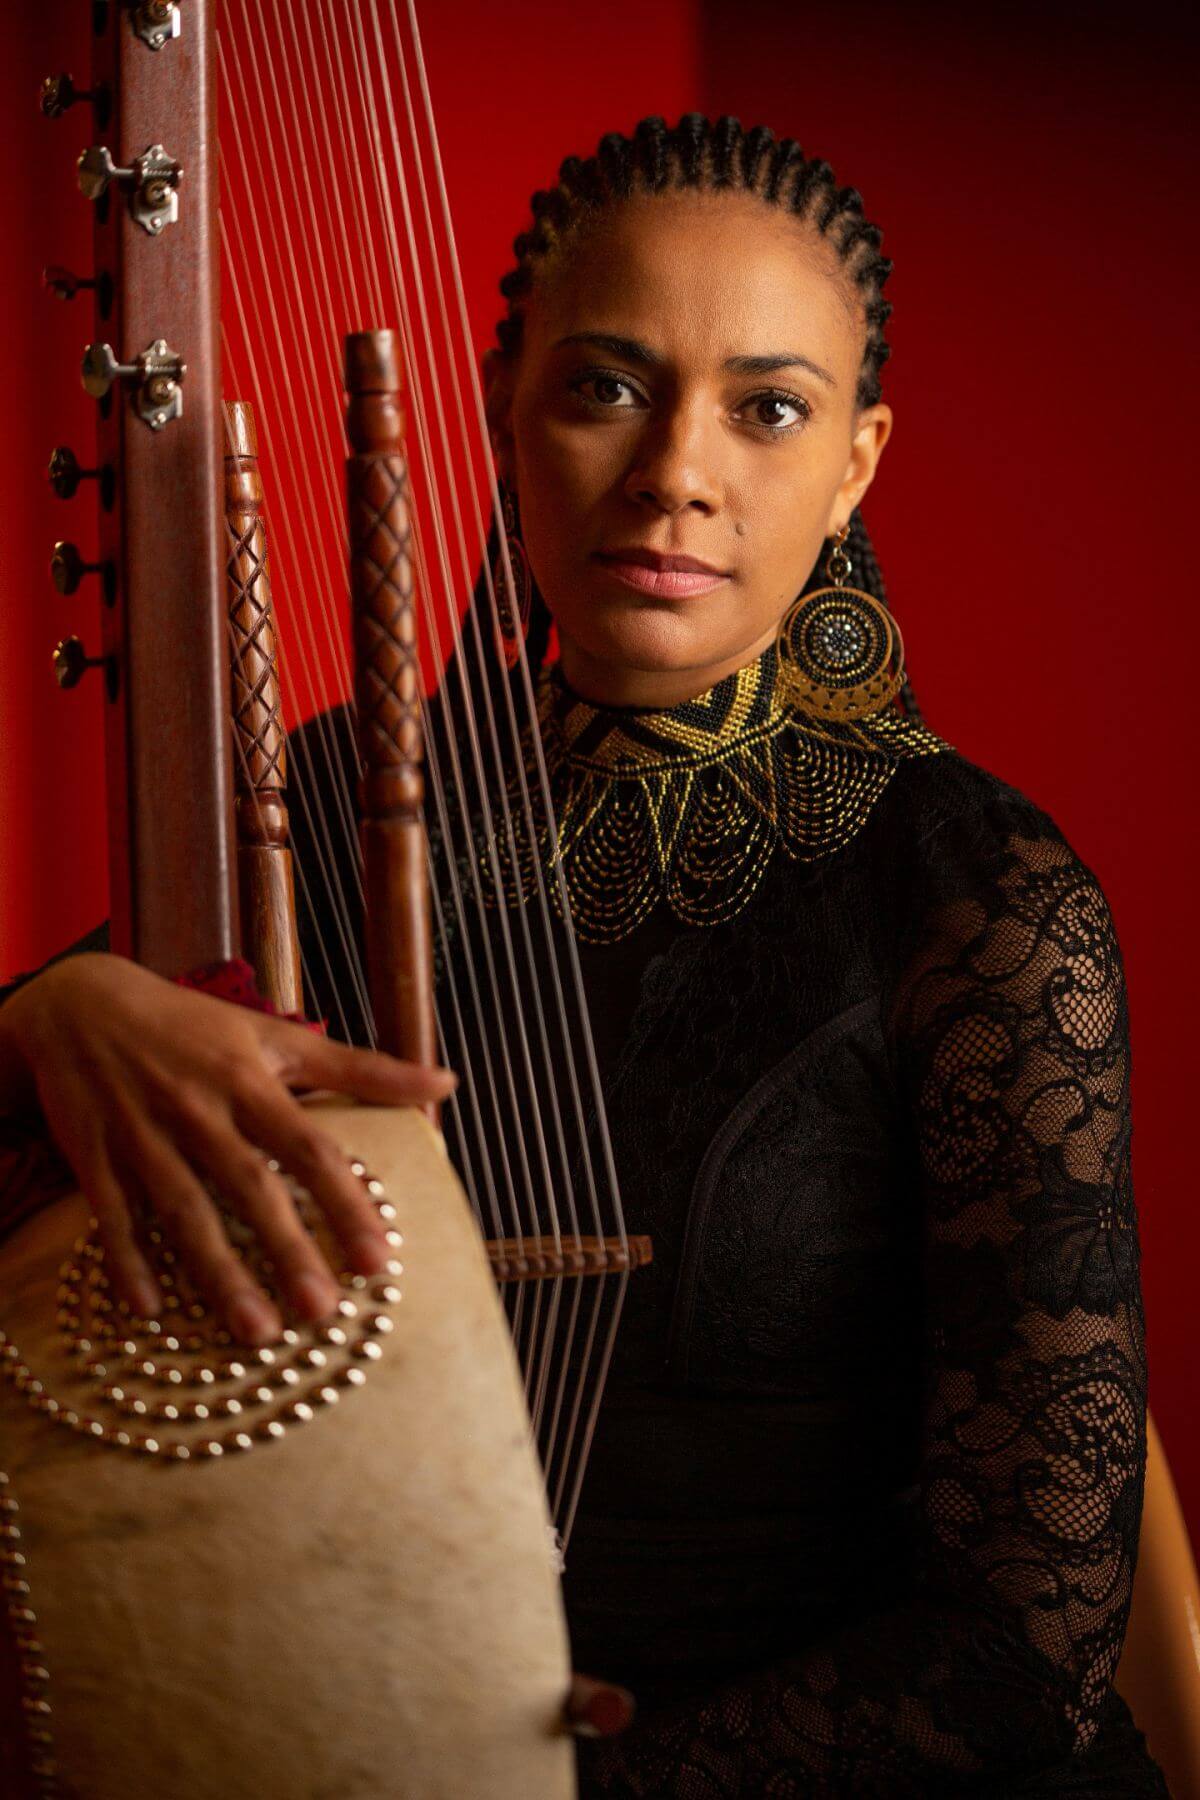 Kora virtuoso and composer Sona Jobarteh (Photo courtesy of the artist)